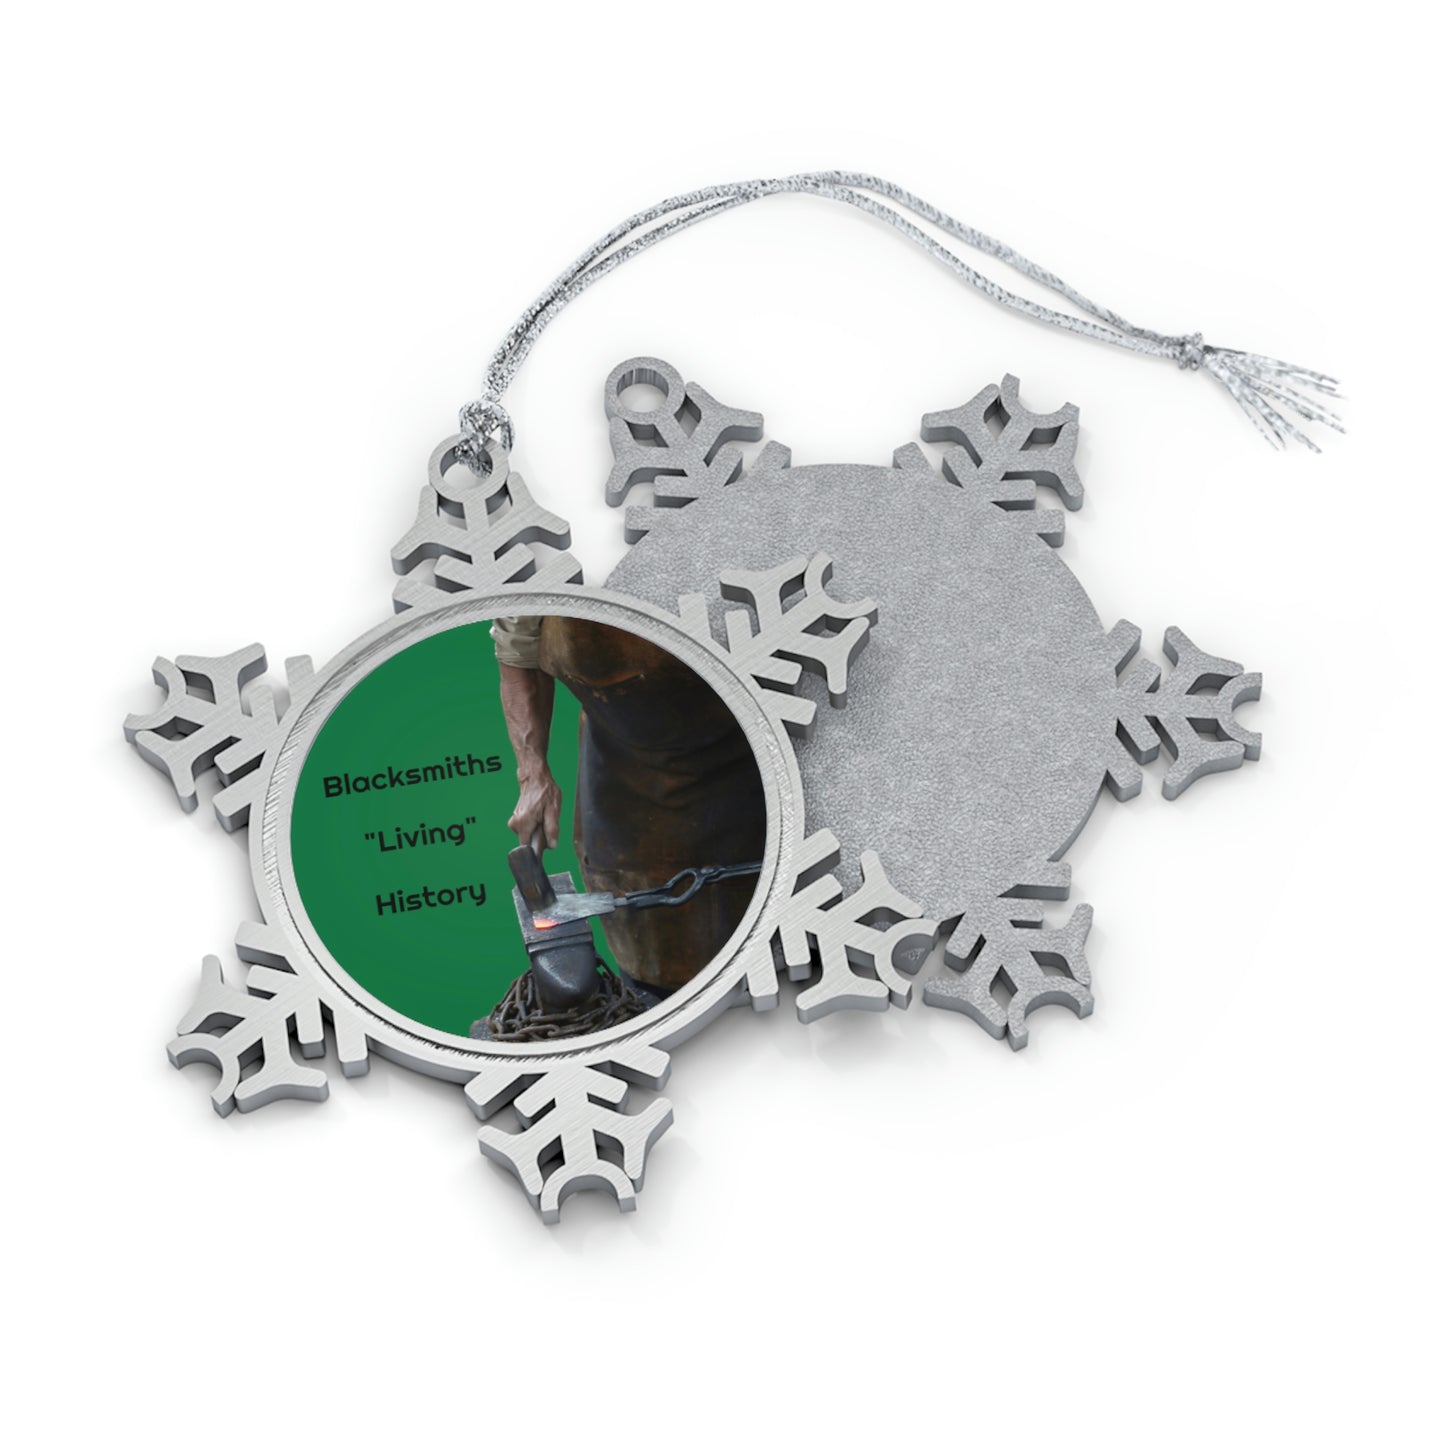 Blacksmiths "Living" History    Pewter Snowflake Ornament